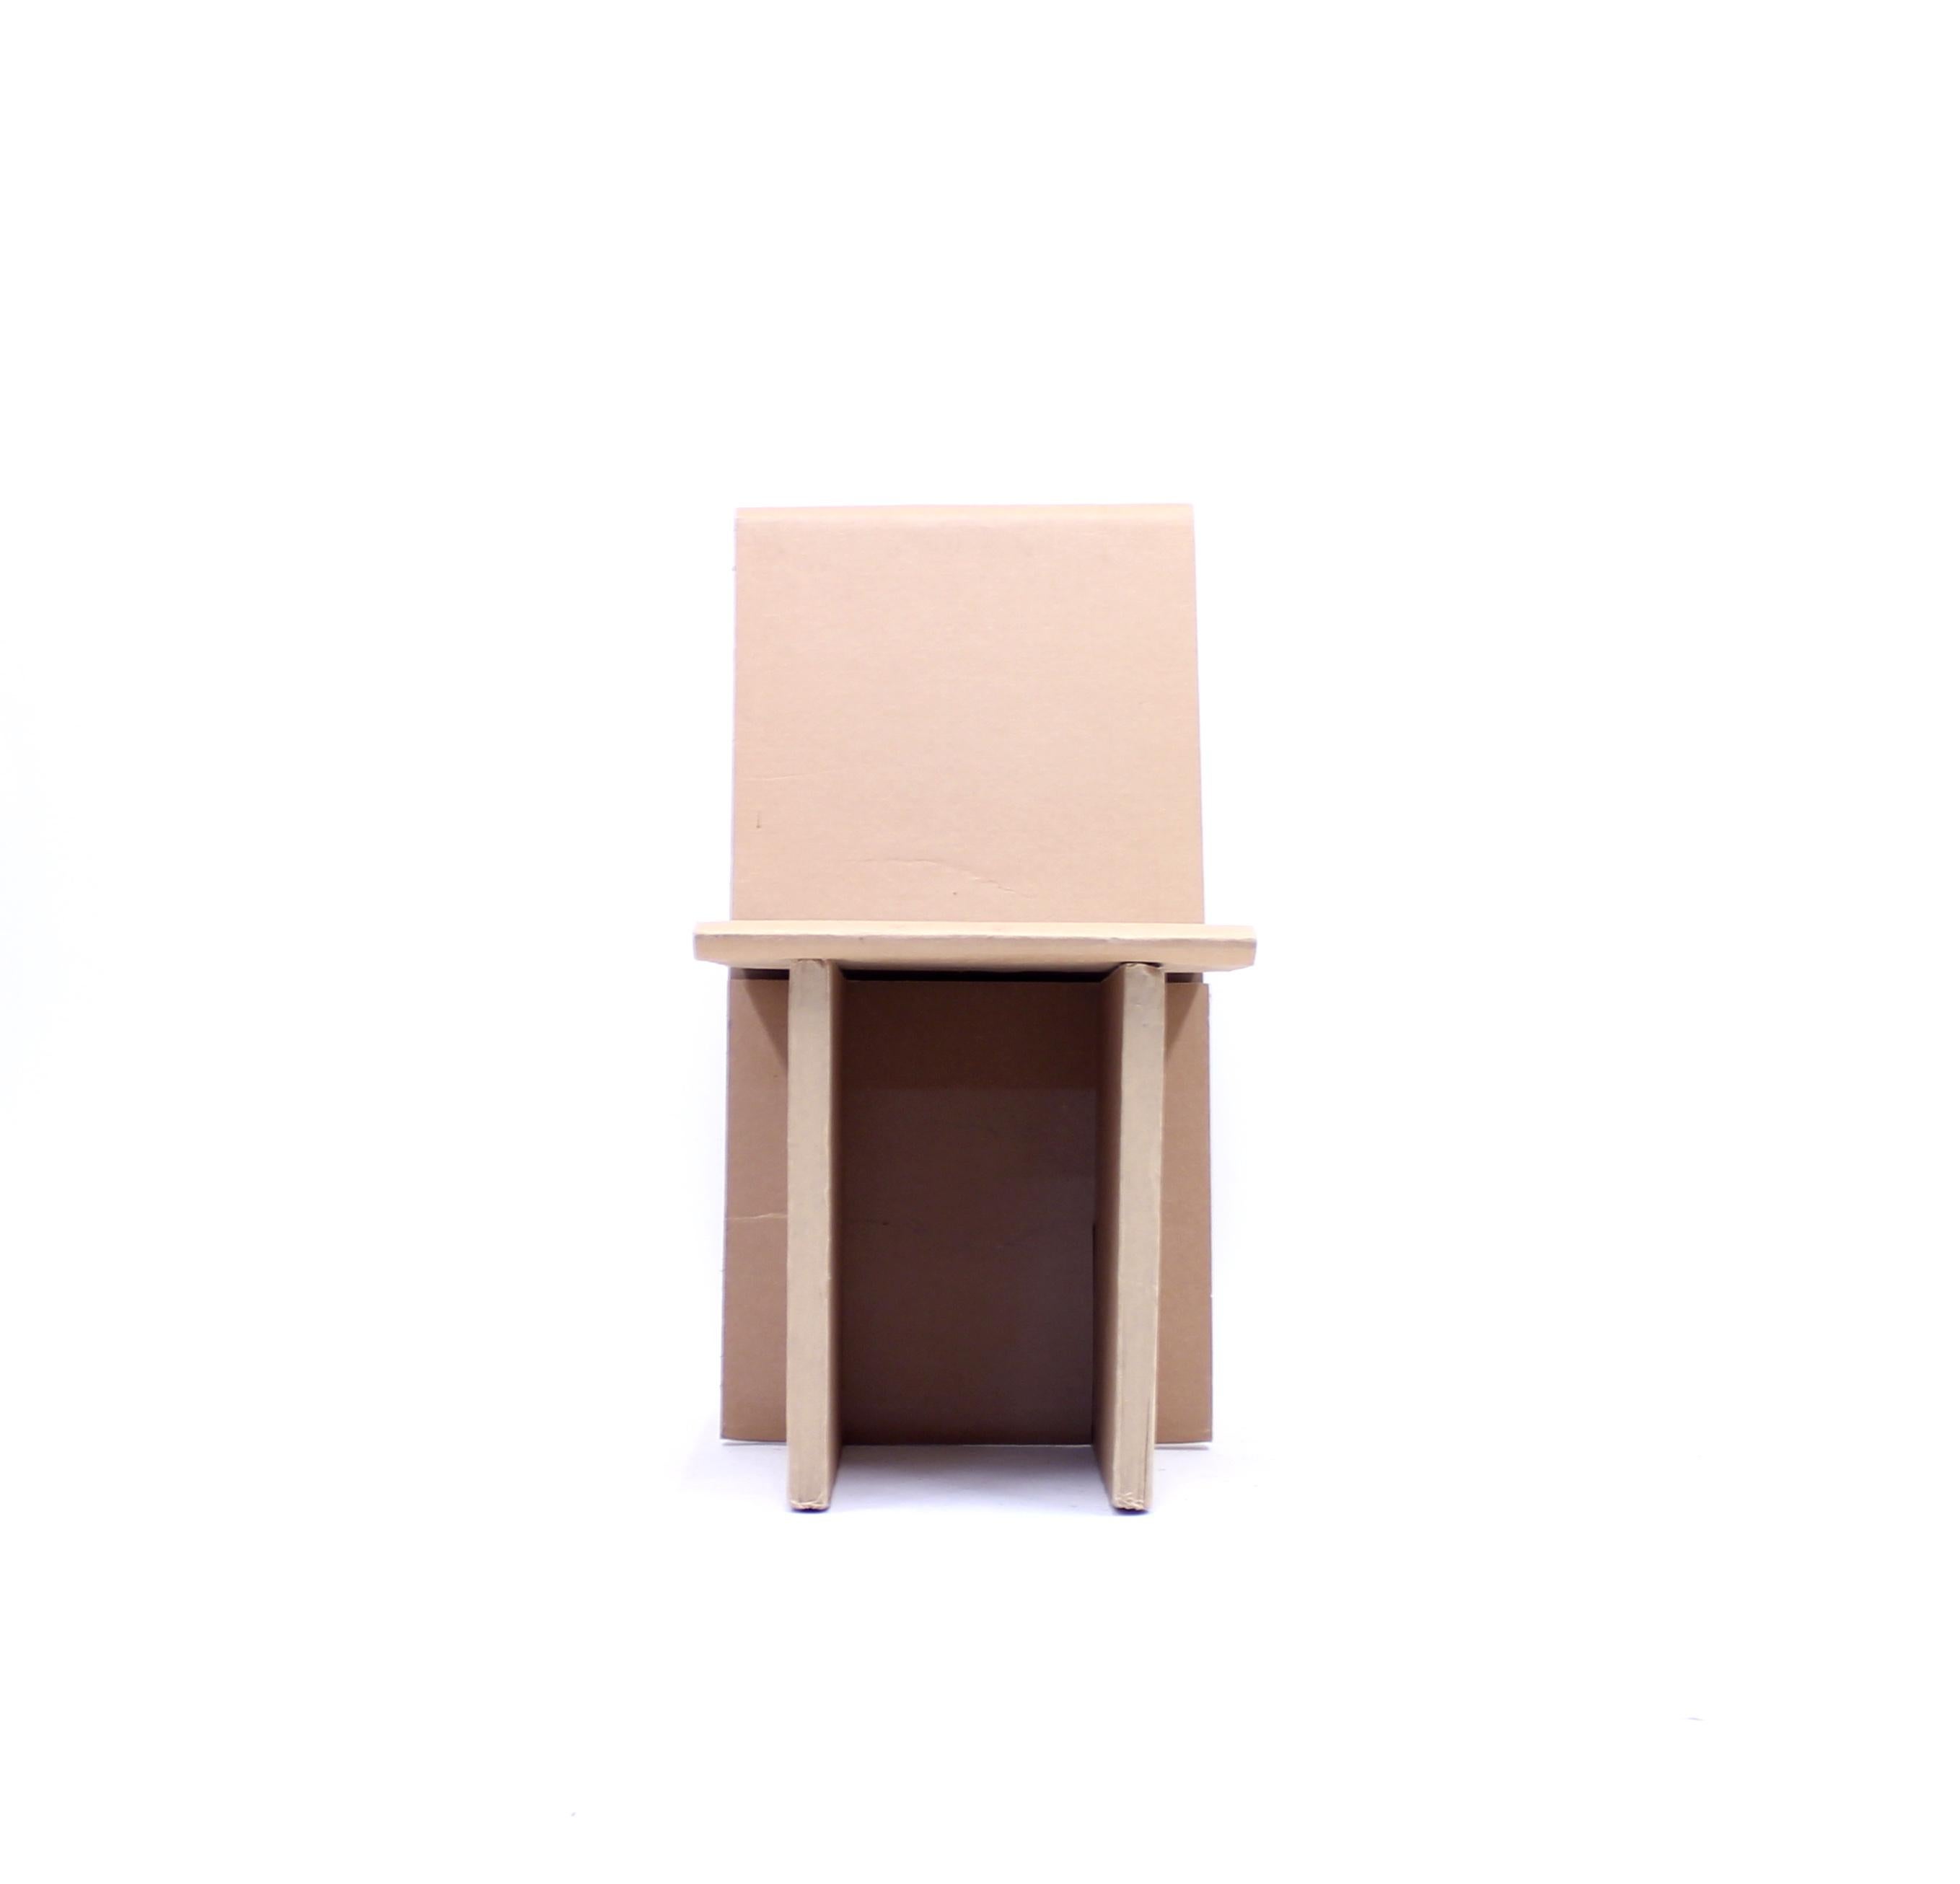 Swedish Sergej Gerasimenko, Limited Edition Cardboard Chair for Returmöbler, circa 2010 For Sale